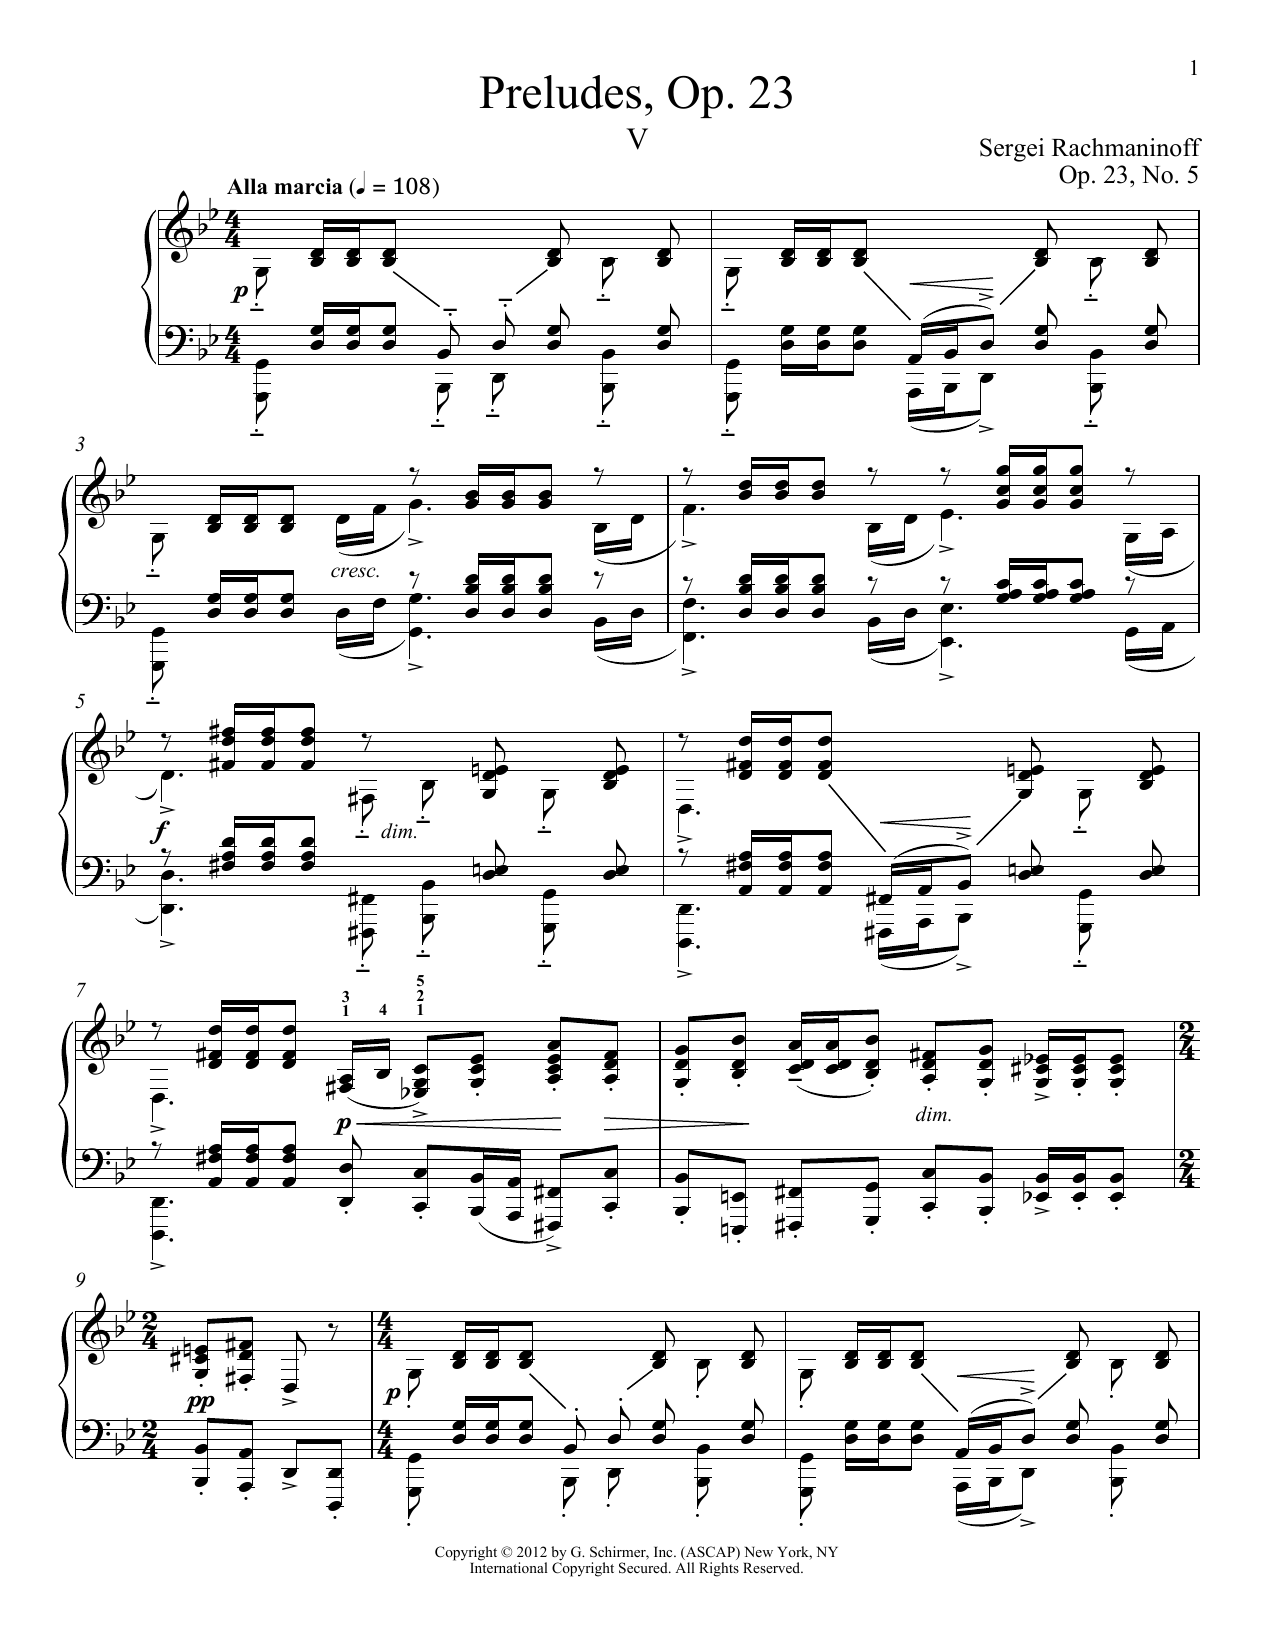 Sergei Rachmaninoff Prelude In G Minor, Op. 23, No. 5 sheet music notes printable PDF score